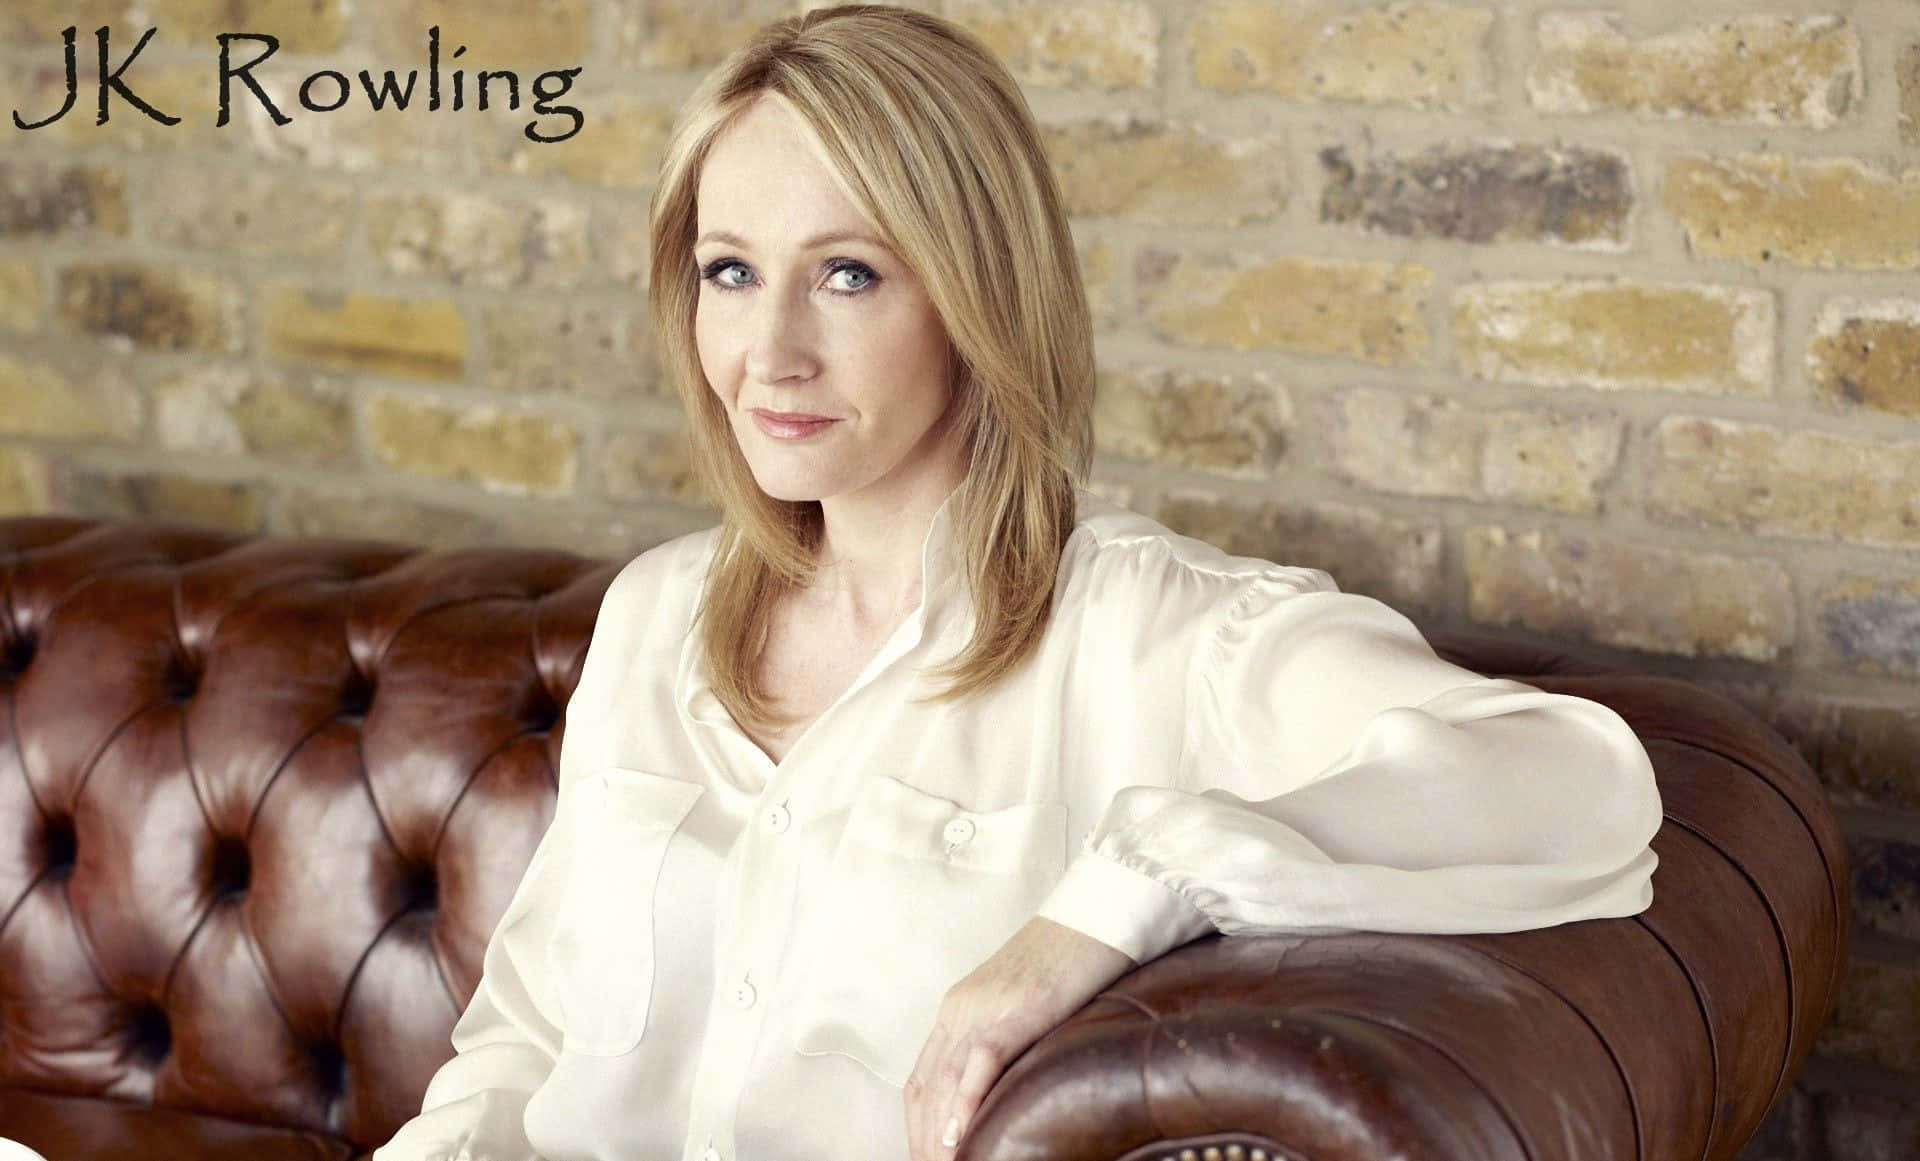 J.K. Rowling during an interview Wallpaper